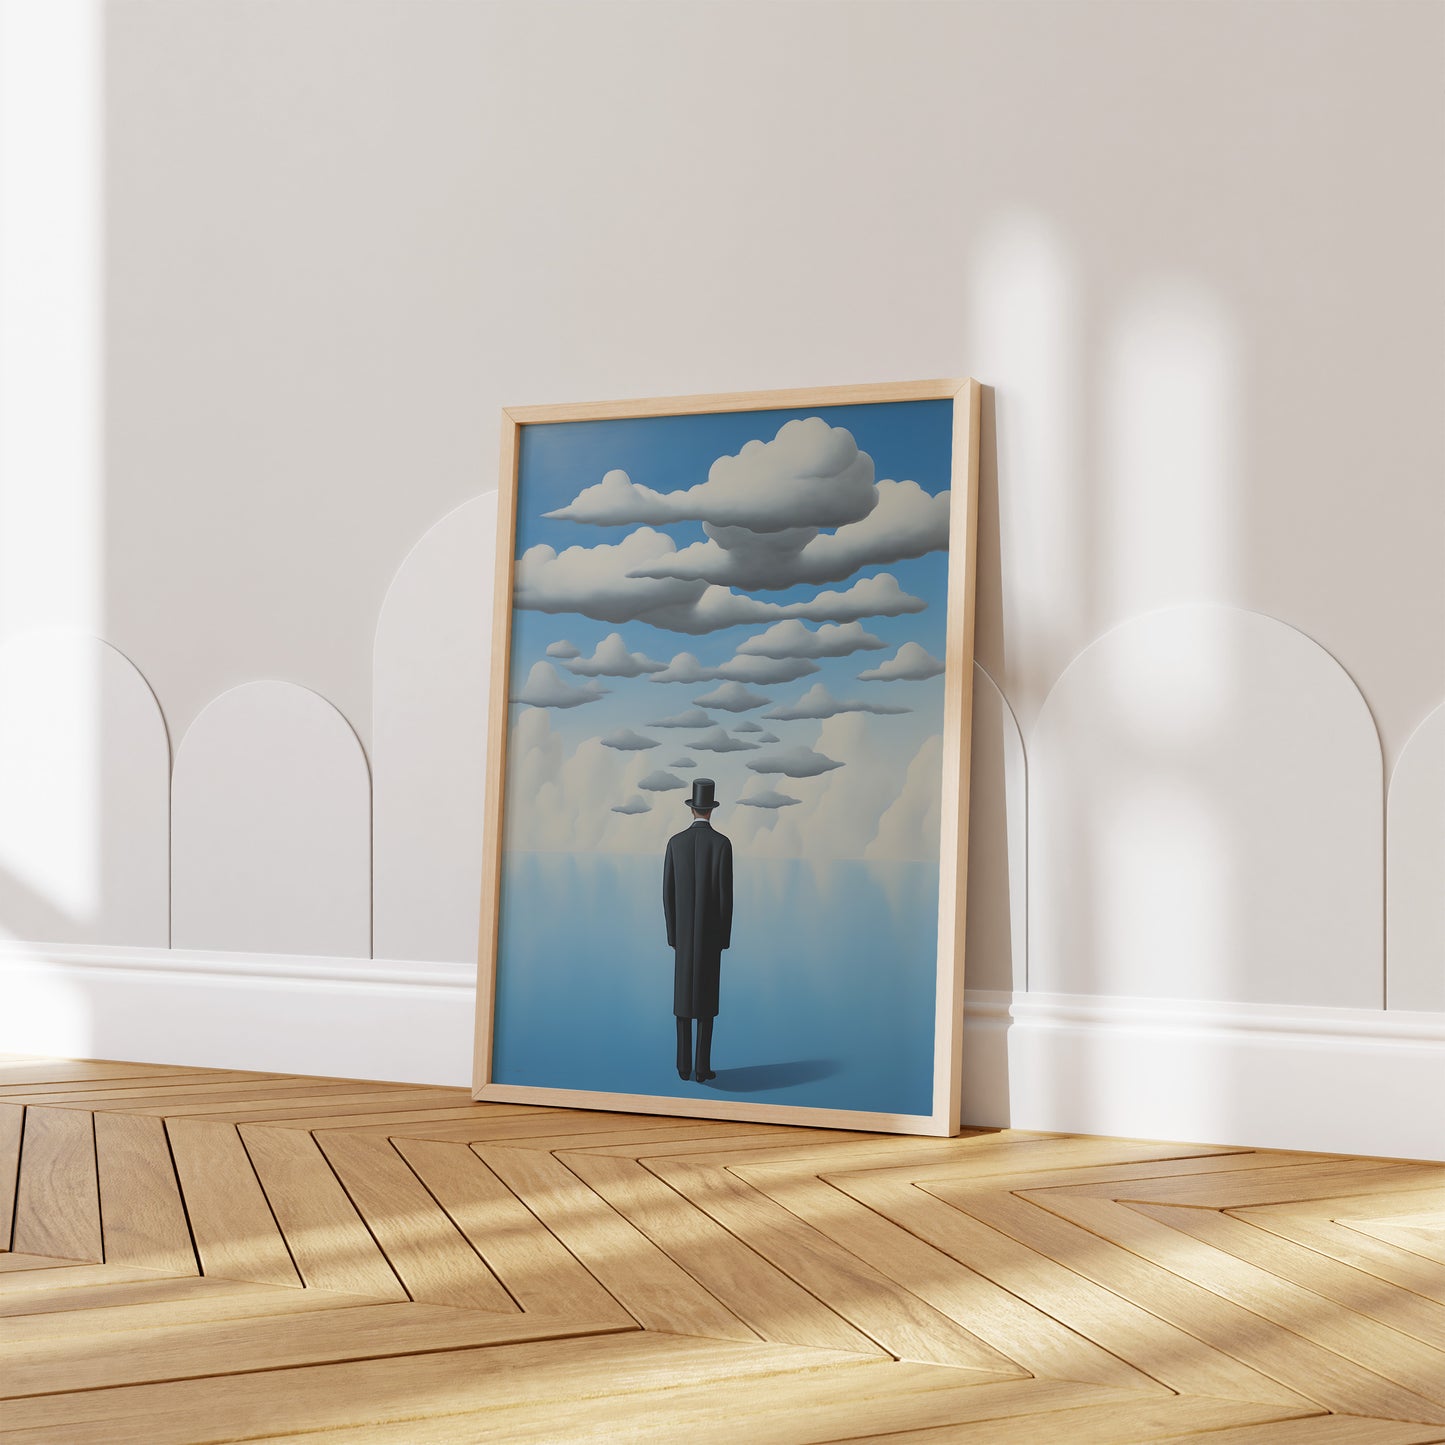 Dreams - René Magritte Poster Print Material   